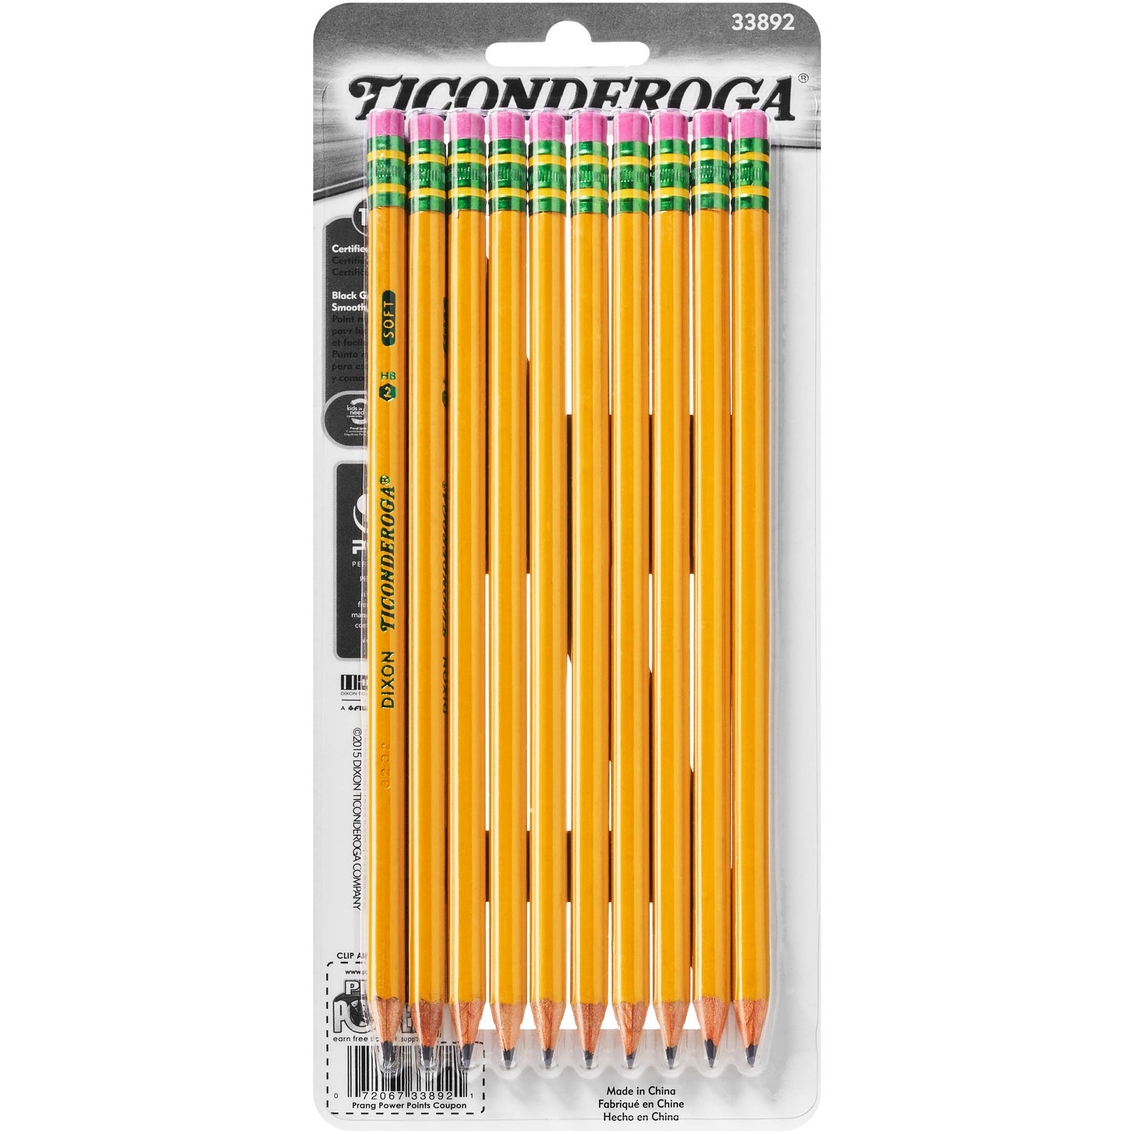 Ticonderoga Pre Sharpened Yellow Wood Cased Pencils 10 ct. - Image 2 of 4